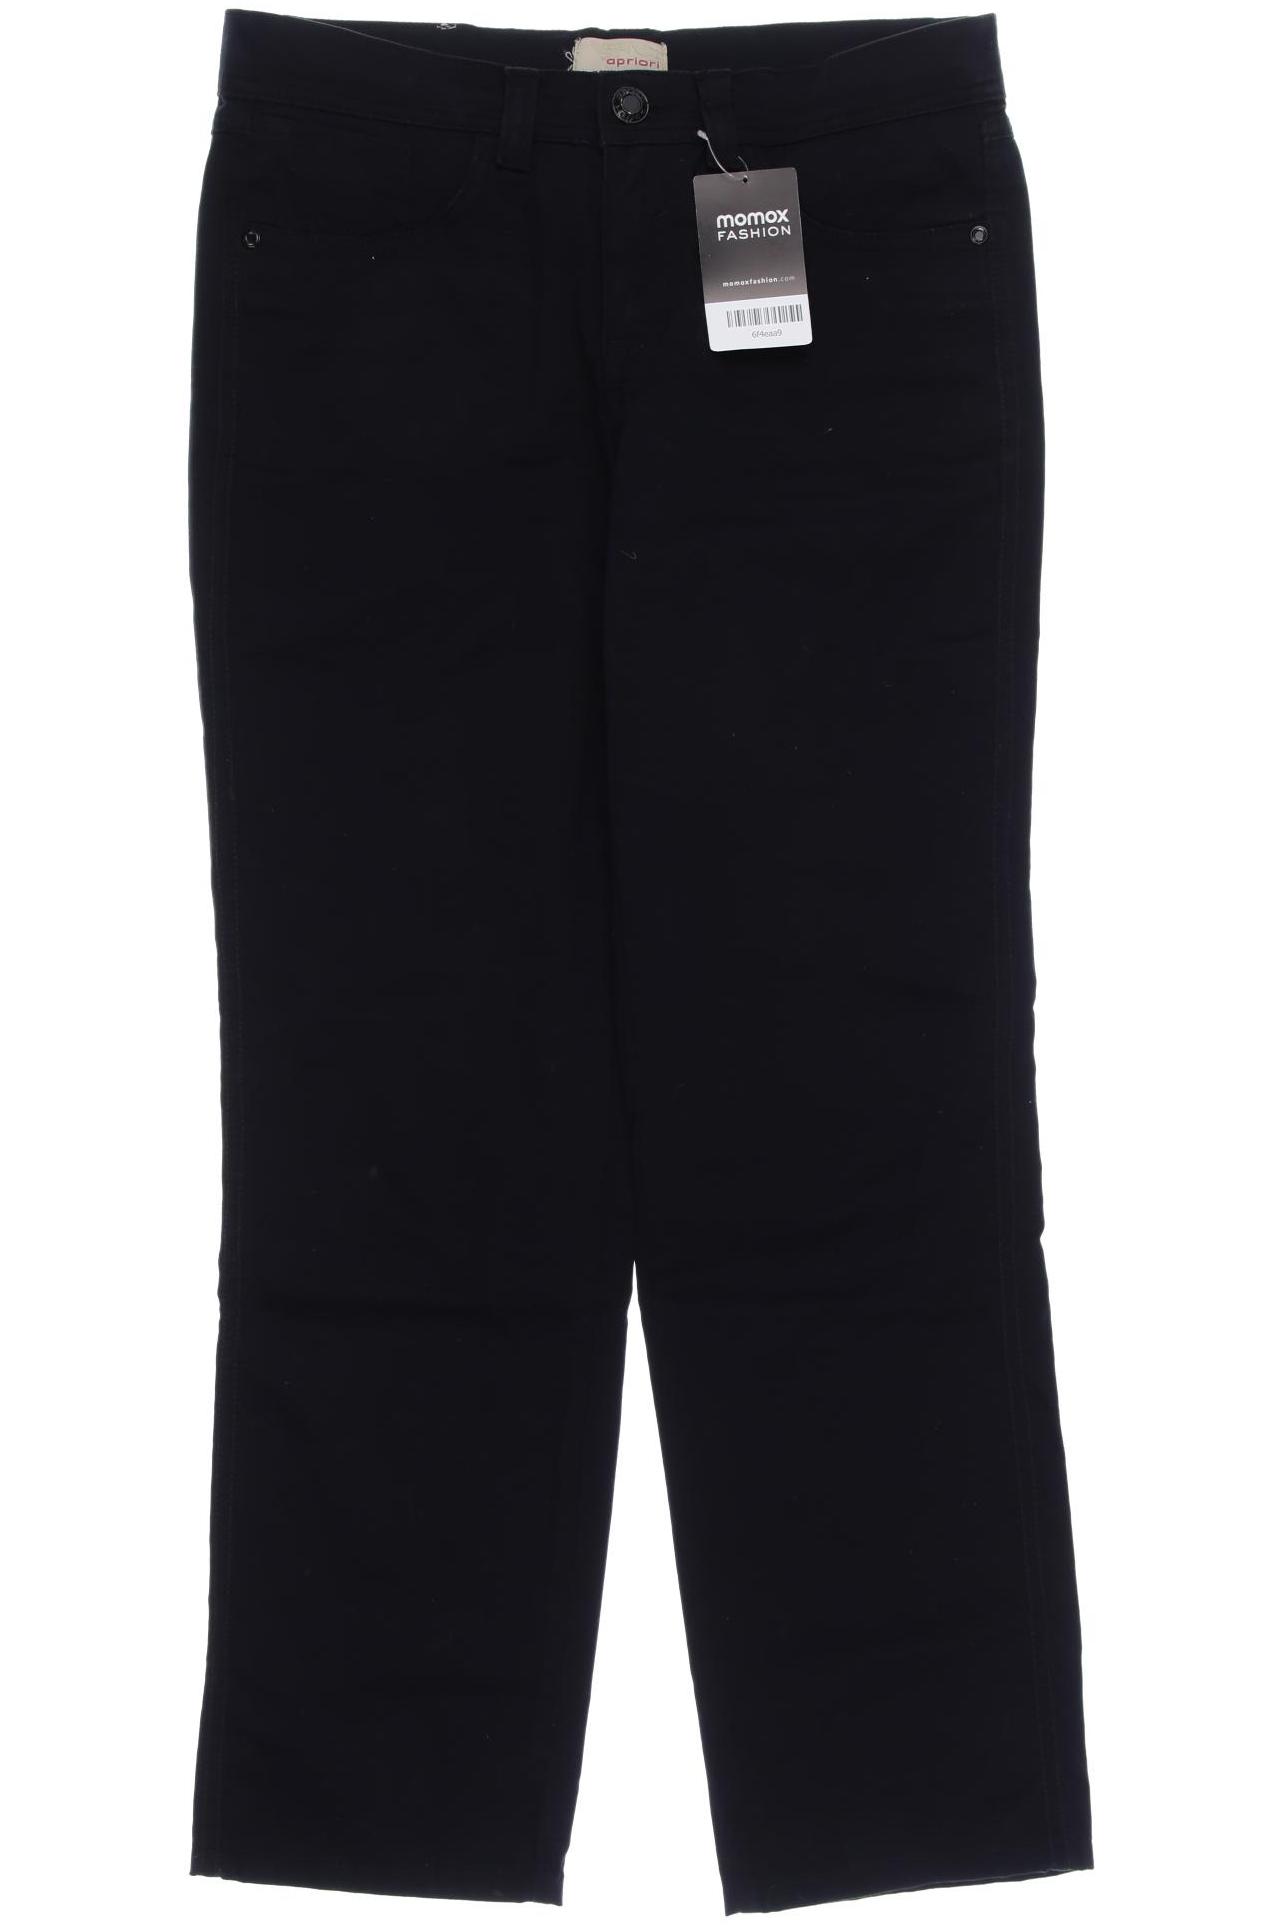 Apriori Damen Jeans, schwarz, Gr. 34 von Apriori